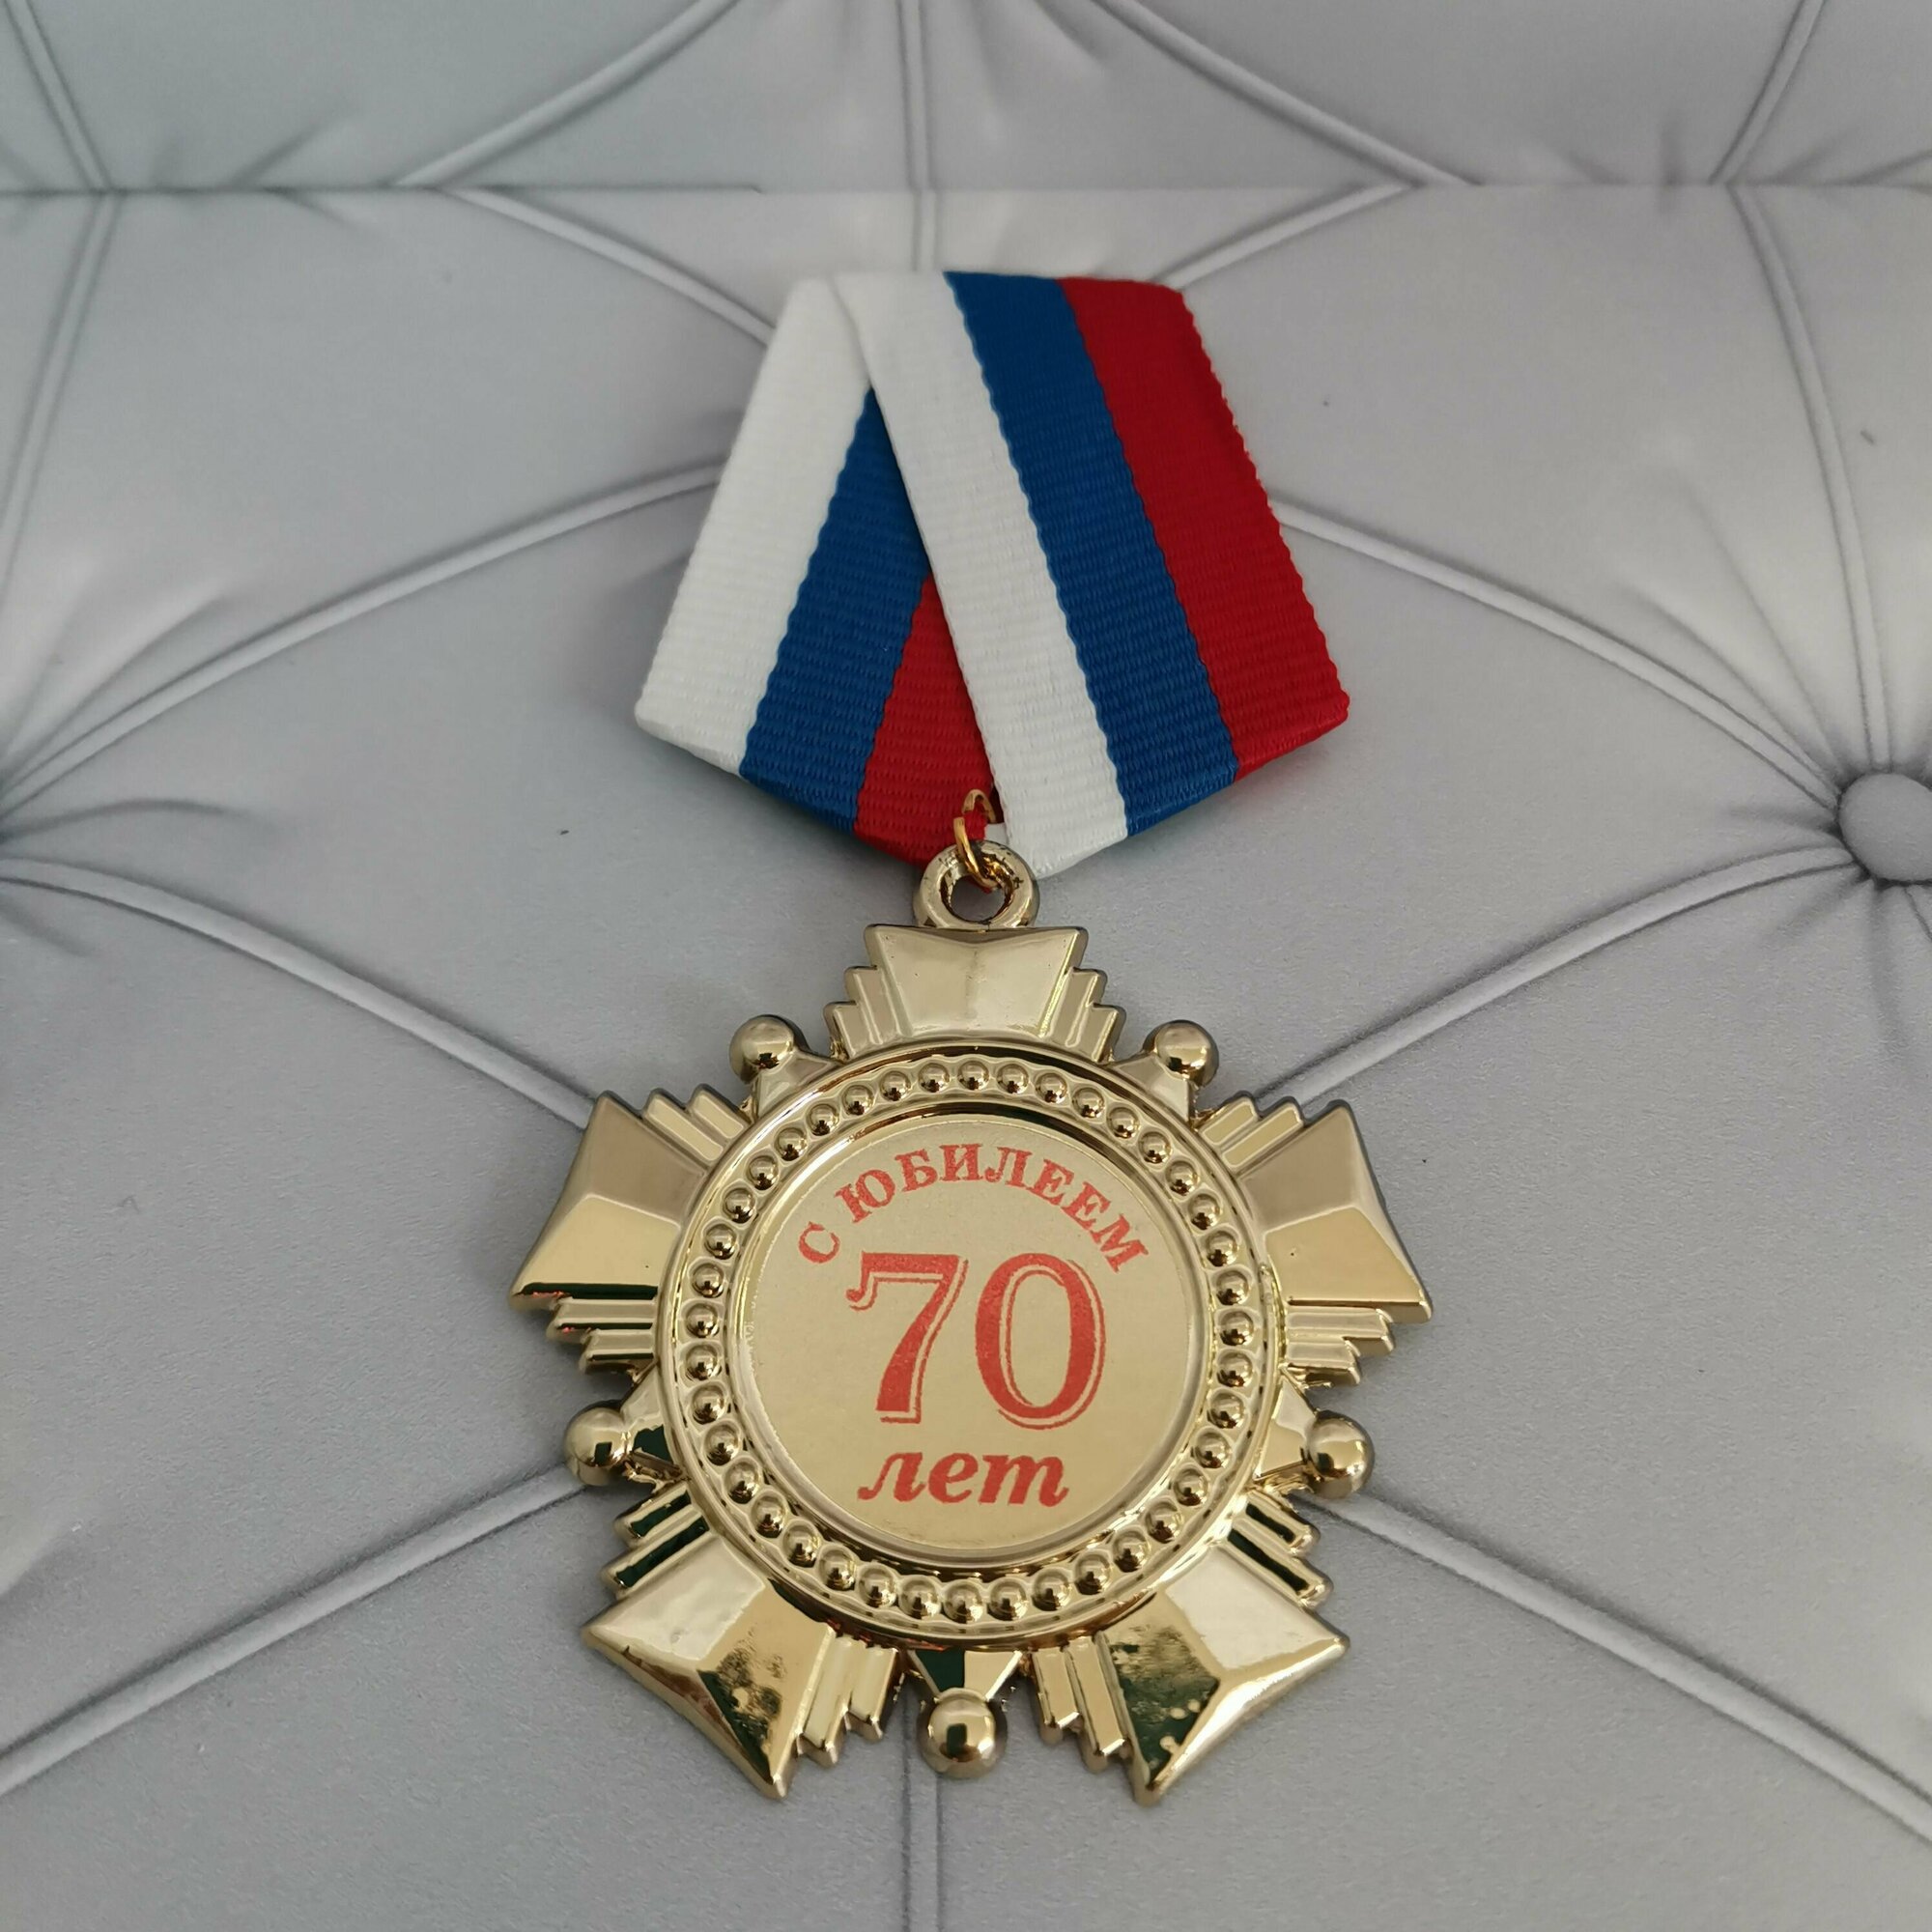 Орден 70 лет, медаль, подарок, сувенир, награда.